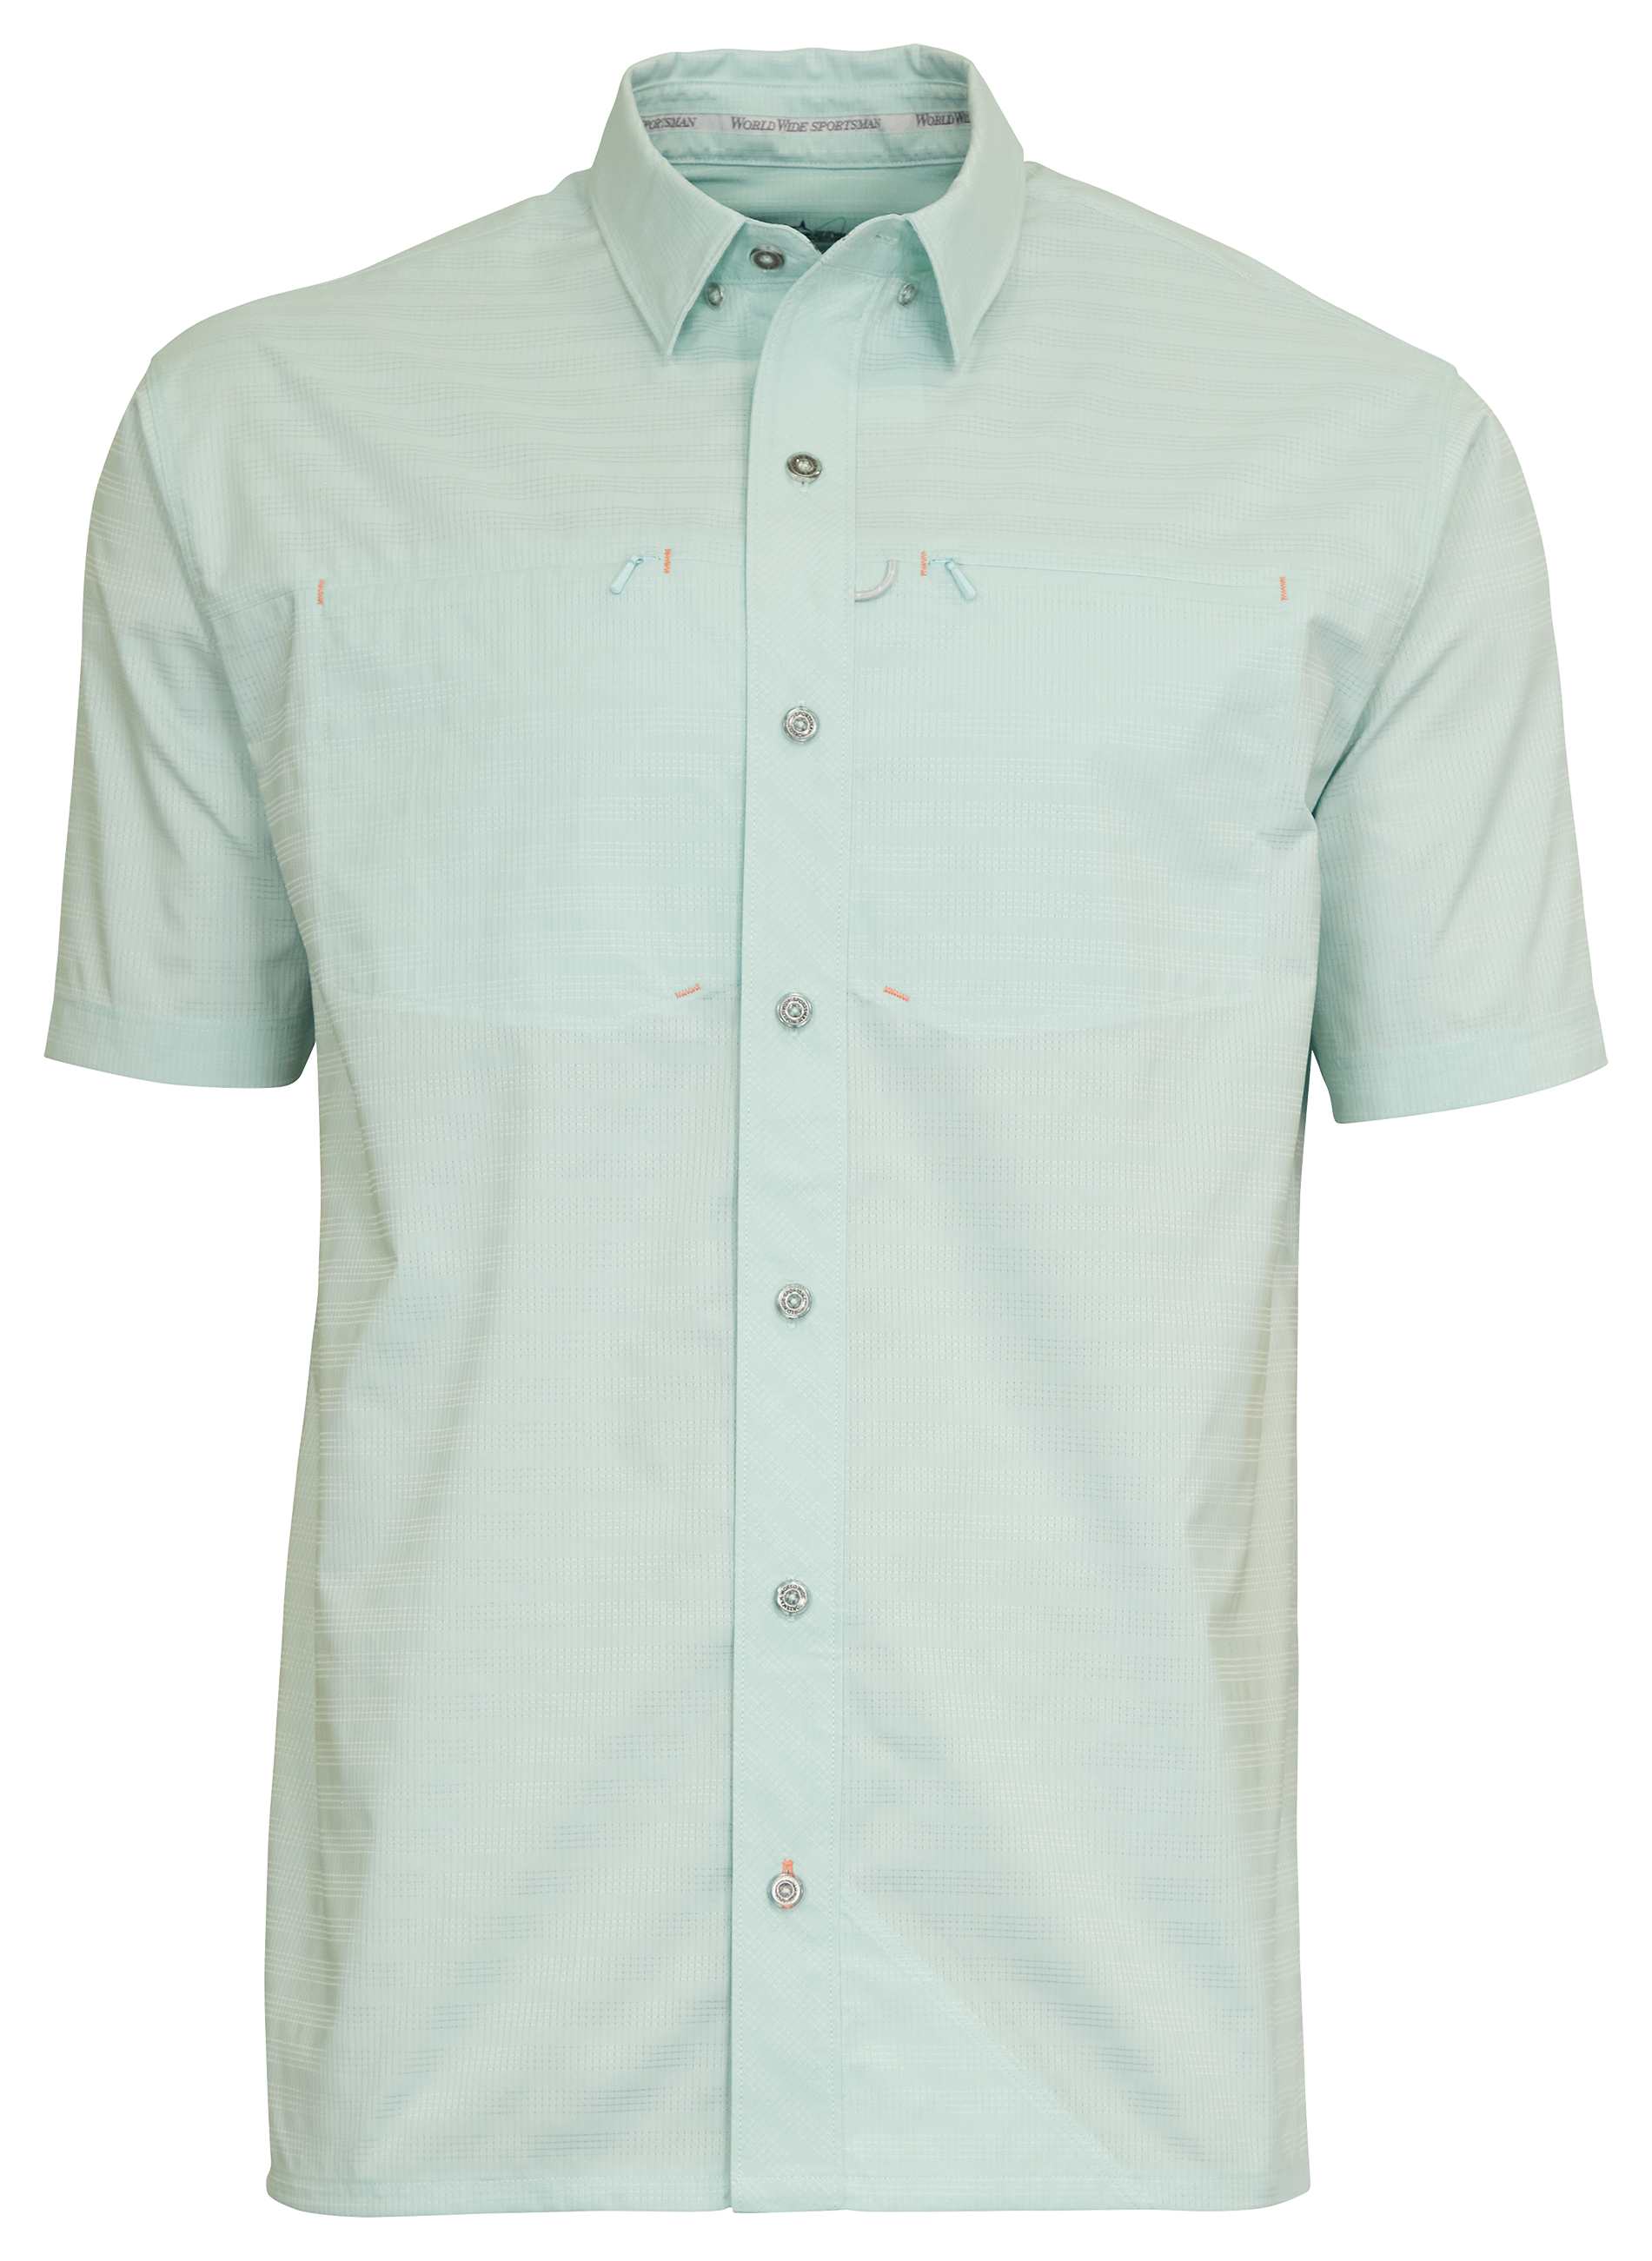 World Wide Sportsman Seacrest 2-Pocket Short-Sleeve Button-Down Shirt for Men - Harbor Gray - M